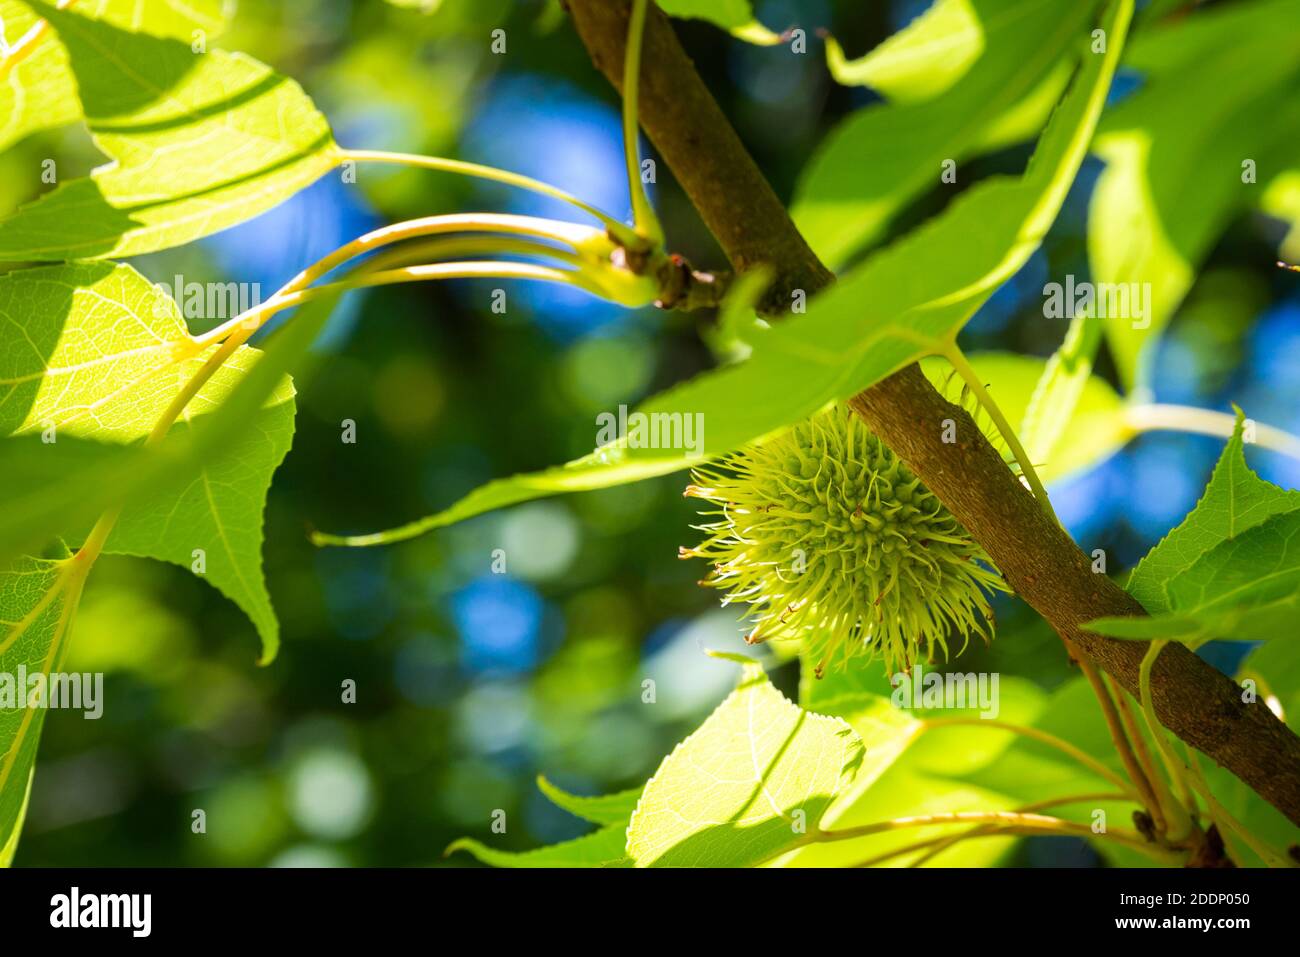 Liquidambar formosana Hance tree in wild nature or garden. Stock Photo